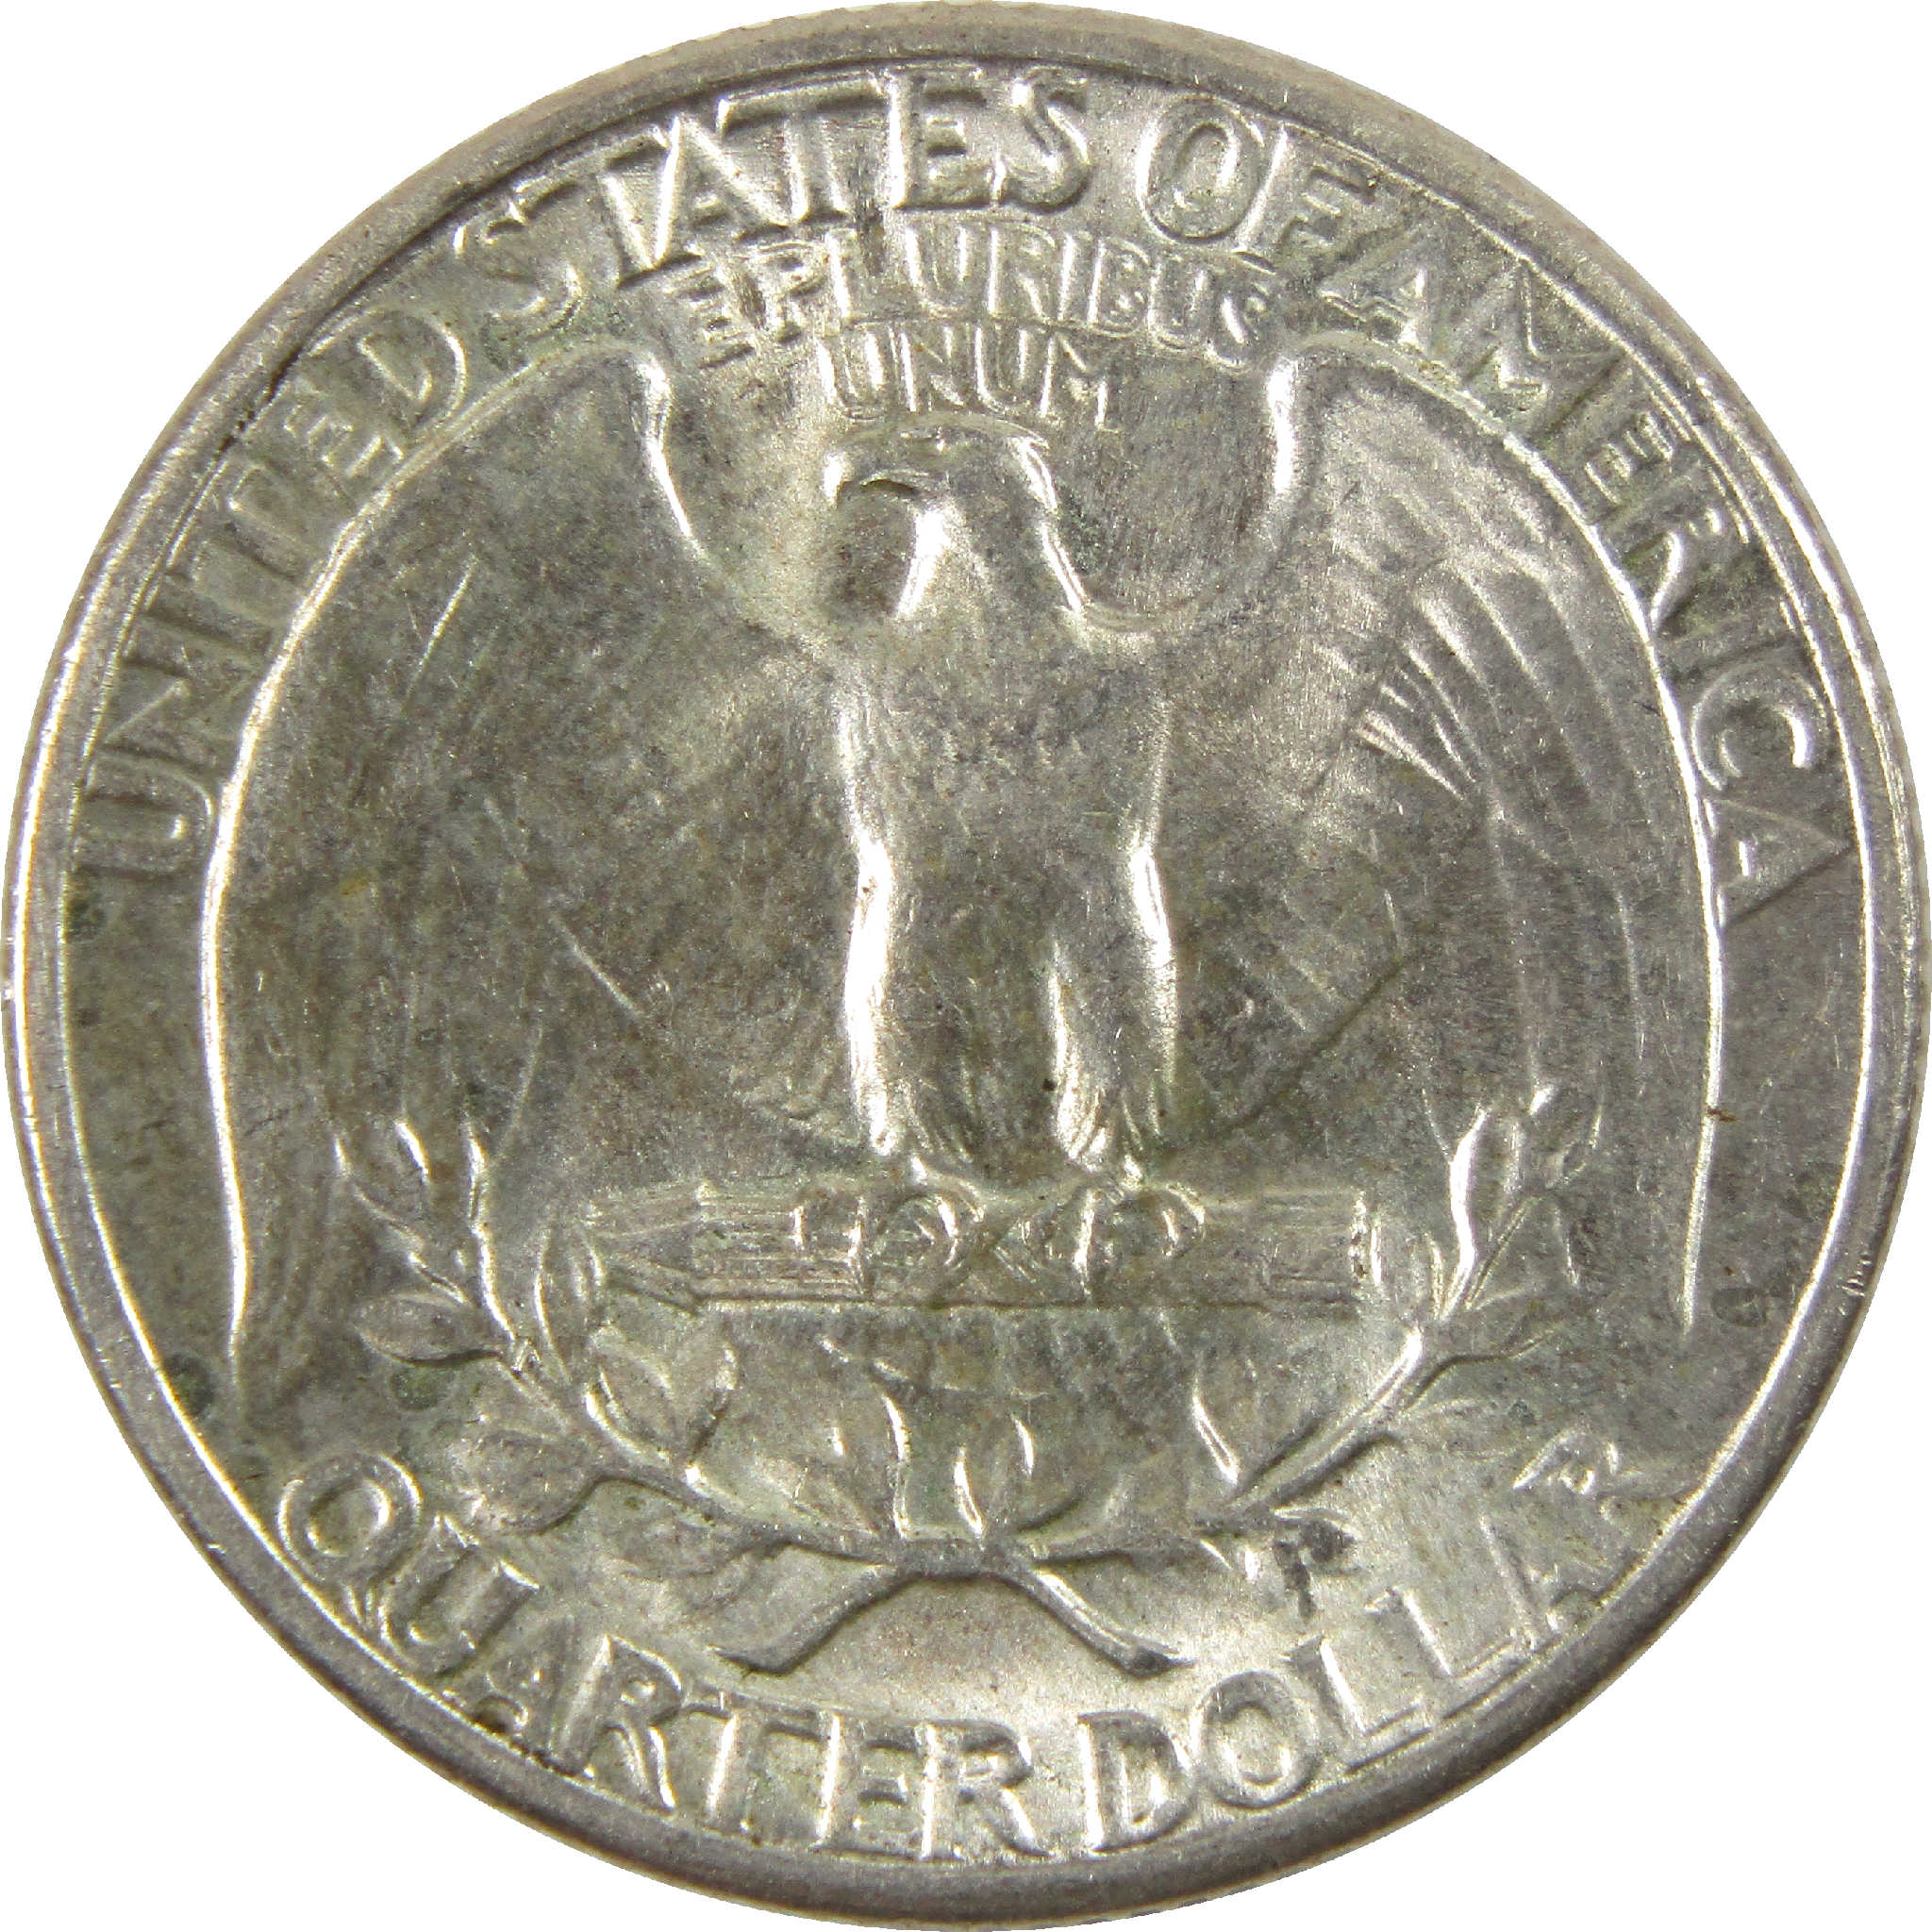 1945 Washington Quarter AU About Uncirculated Silver 25c Coin